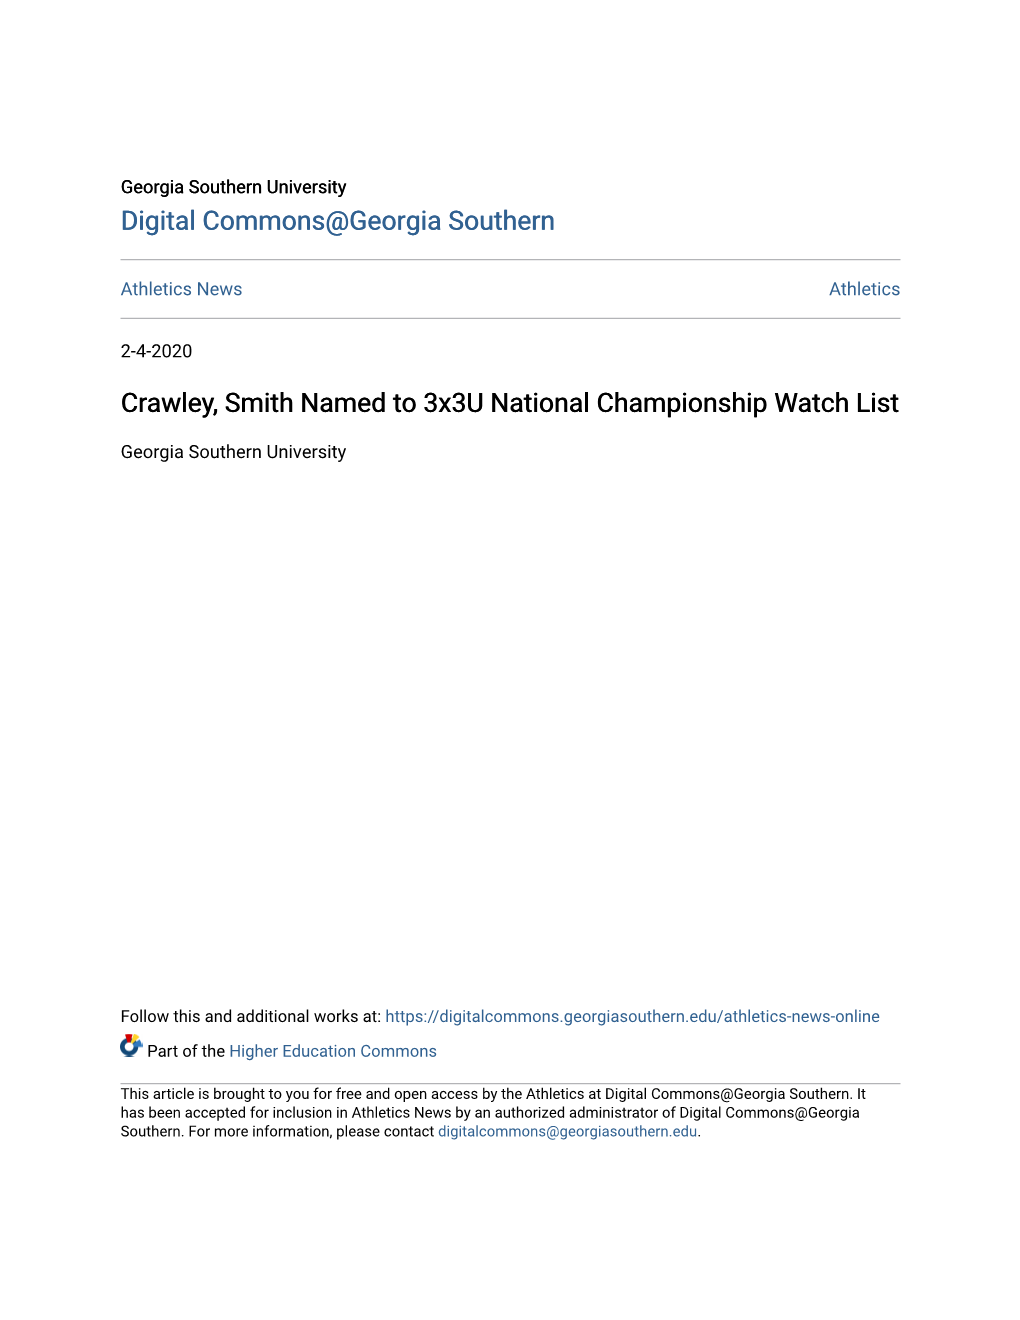 Crawley, Smith Named to 3X3u National Championship Watch List